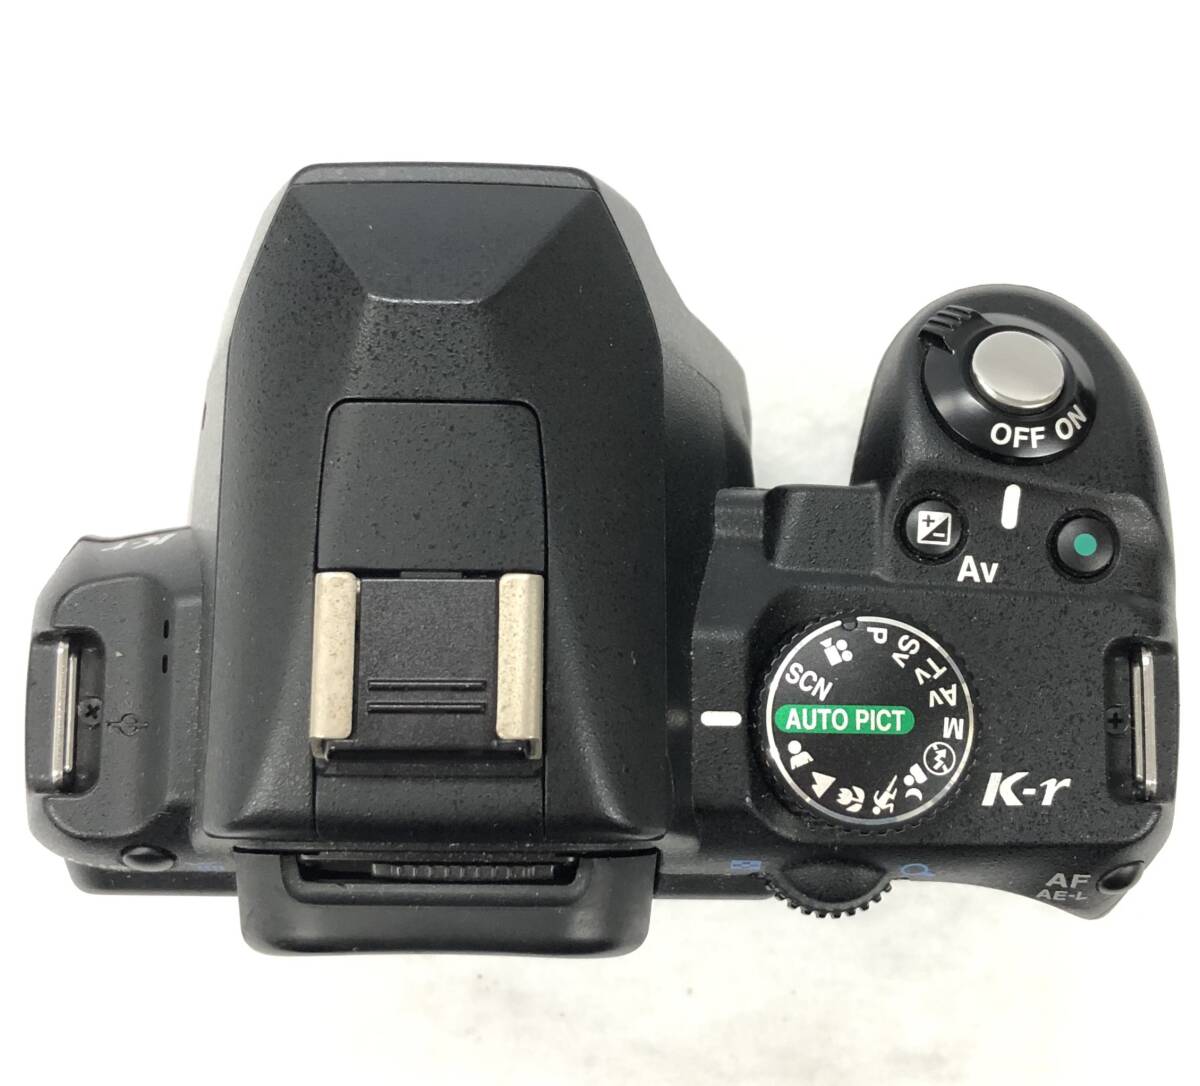 PENTAX K-r / SR / PENTAX-DA L 1:3.5-5.6 18-55mm AL / ペンタックス / デジタル一眼レフカメラ / 充電器等 付属 / 通電確認済み / 現状品_画像6